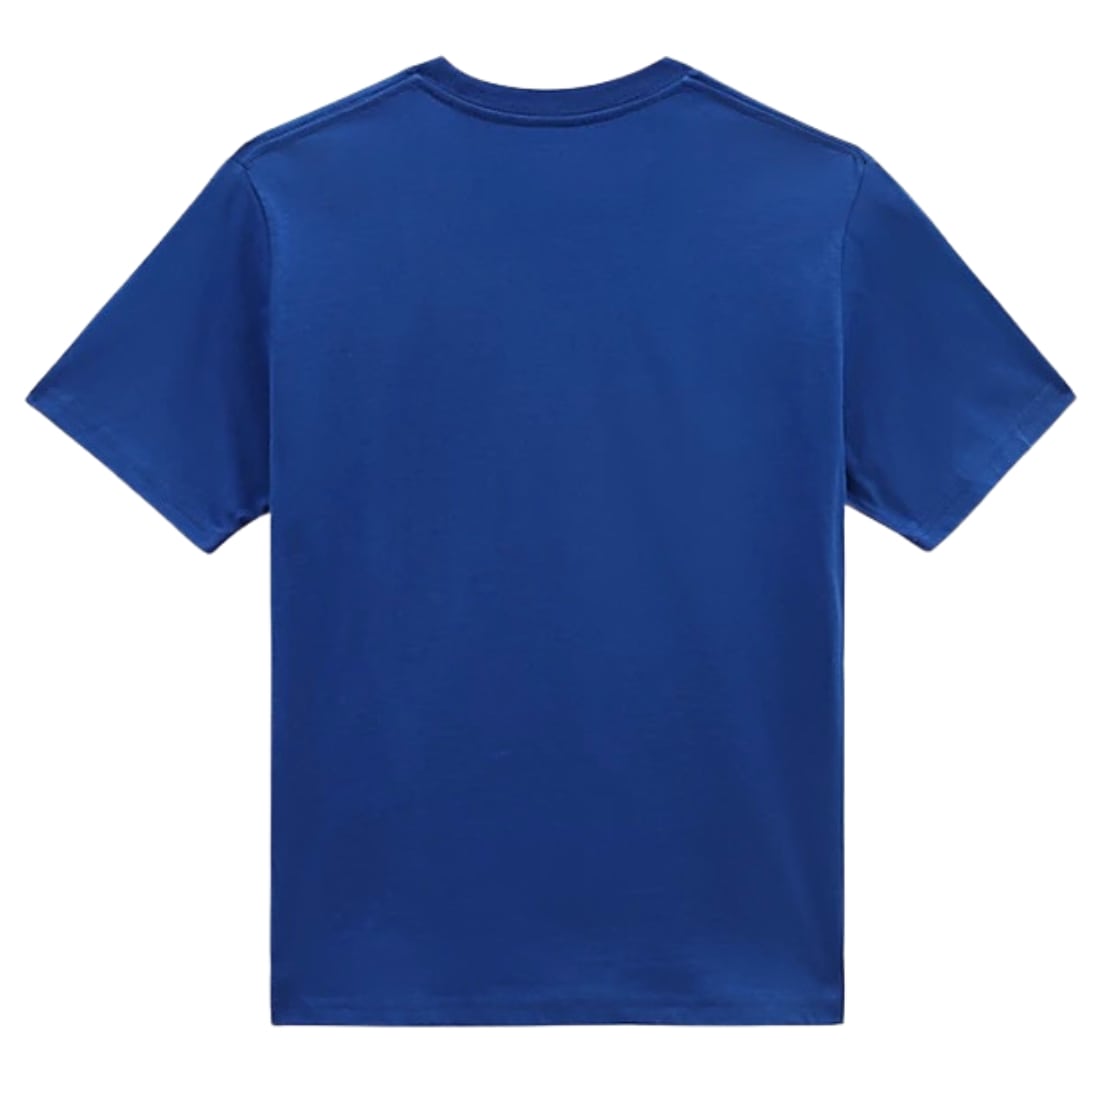 Vans Kids Reflective Checkerboard Flame Boys T-Shirt - Blue - Boys Surf Brand T-Shirt by Vans